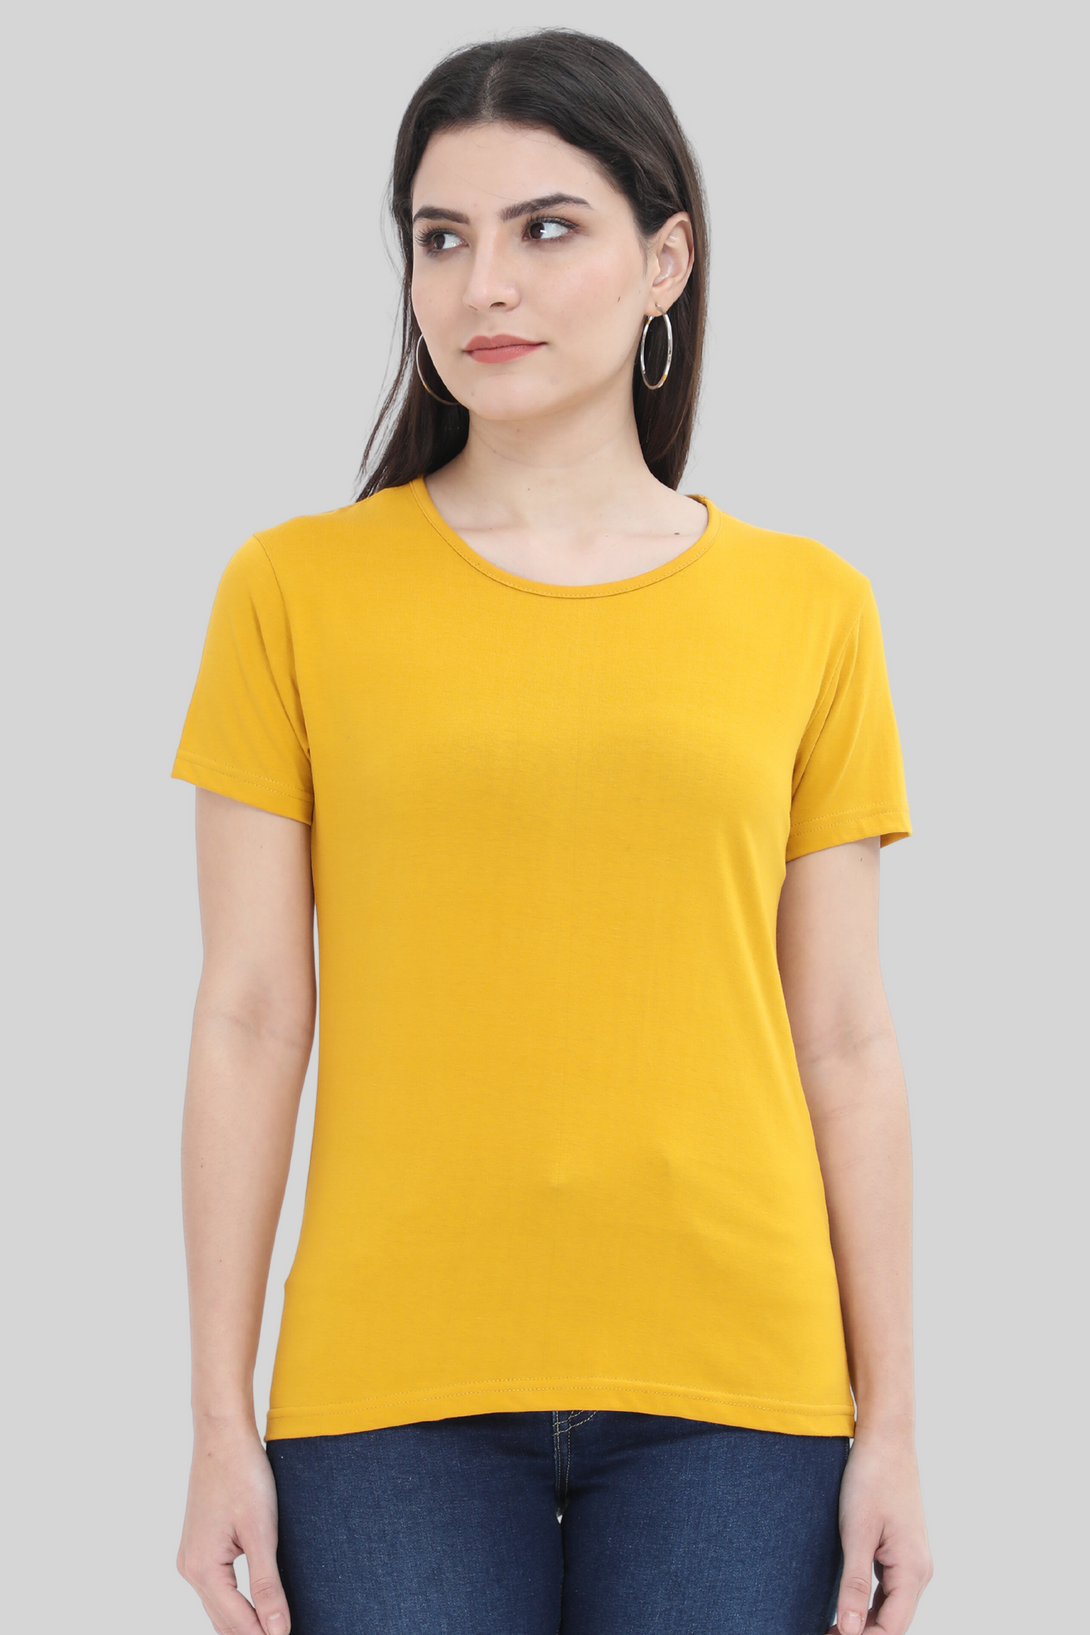 Mustard Yellow Scoop Neck T-Shirt For Women - WowWaves - 1